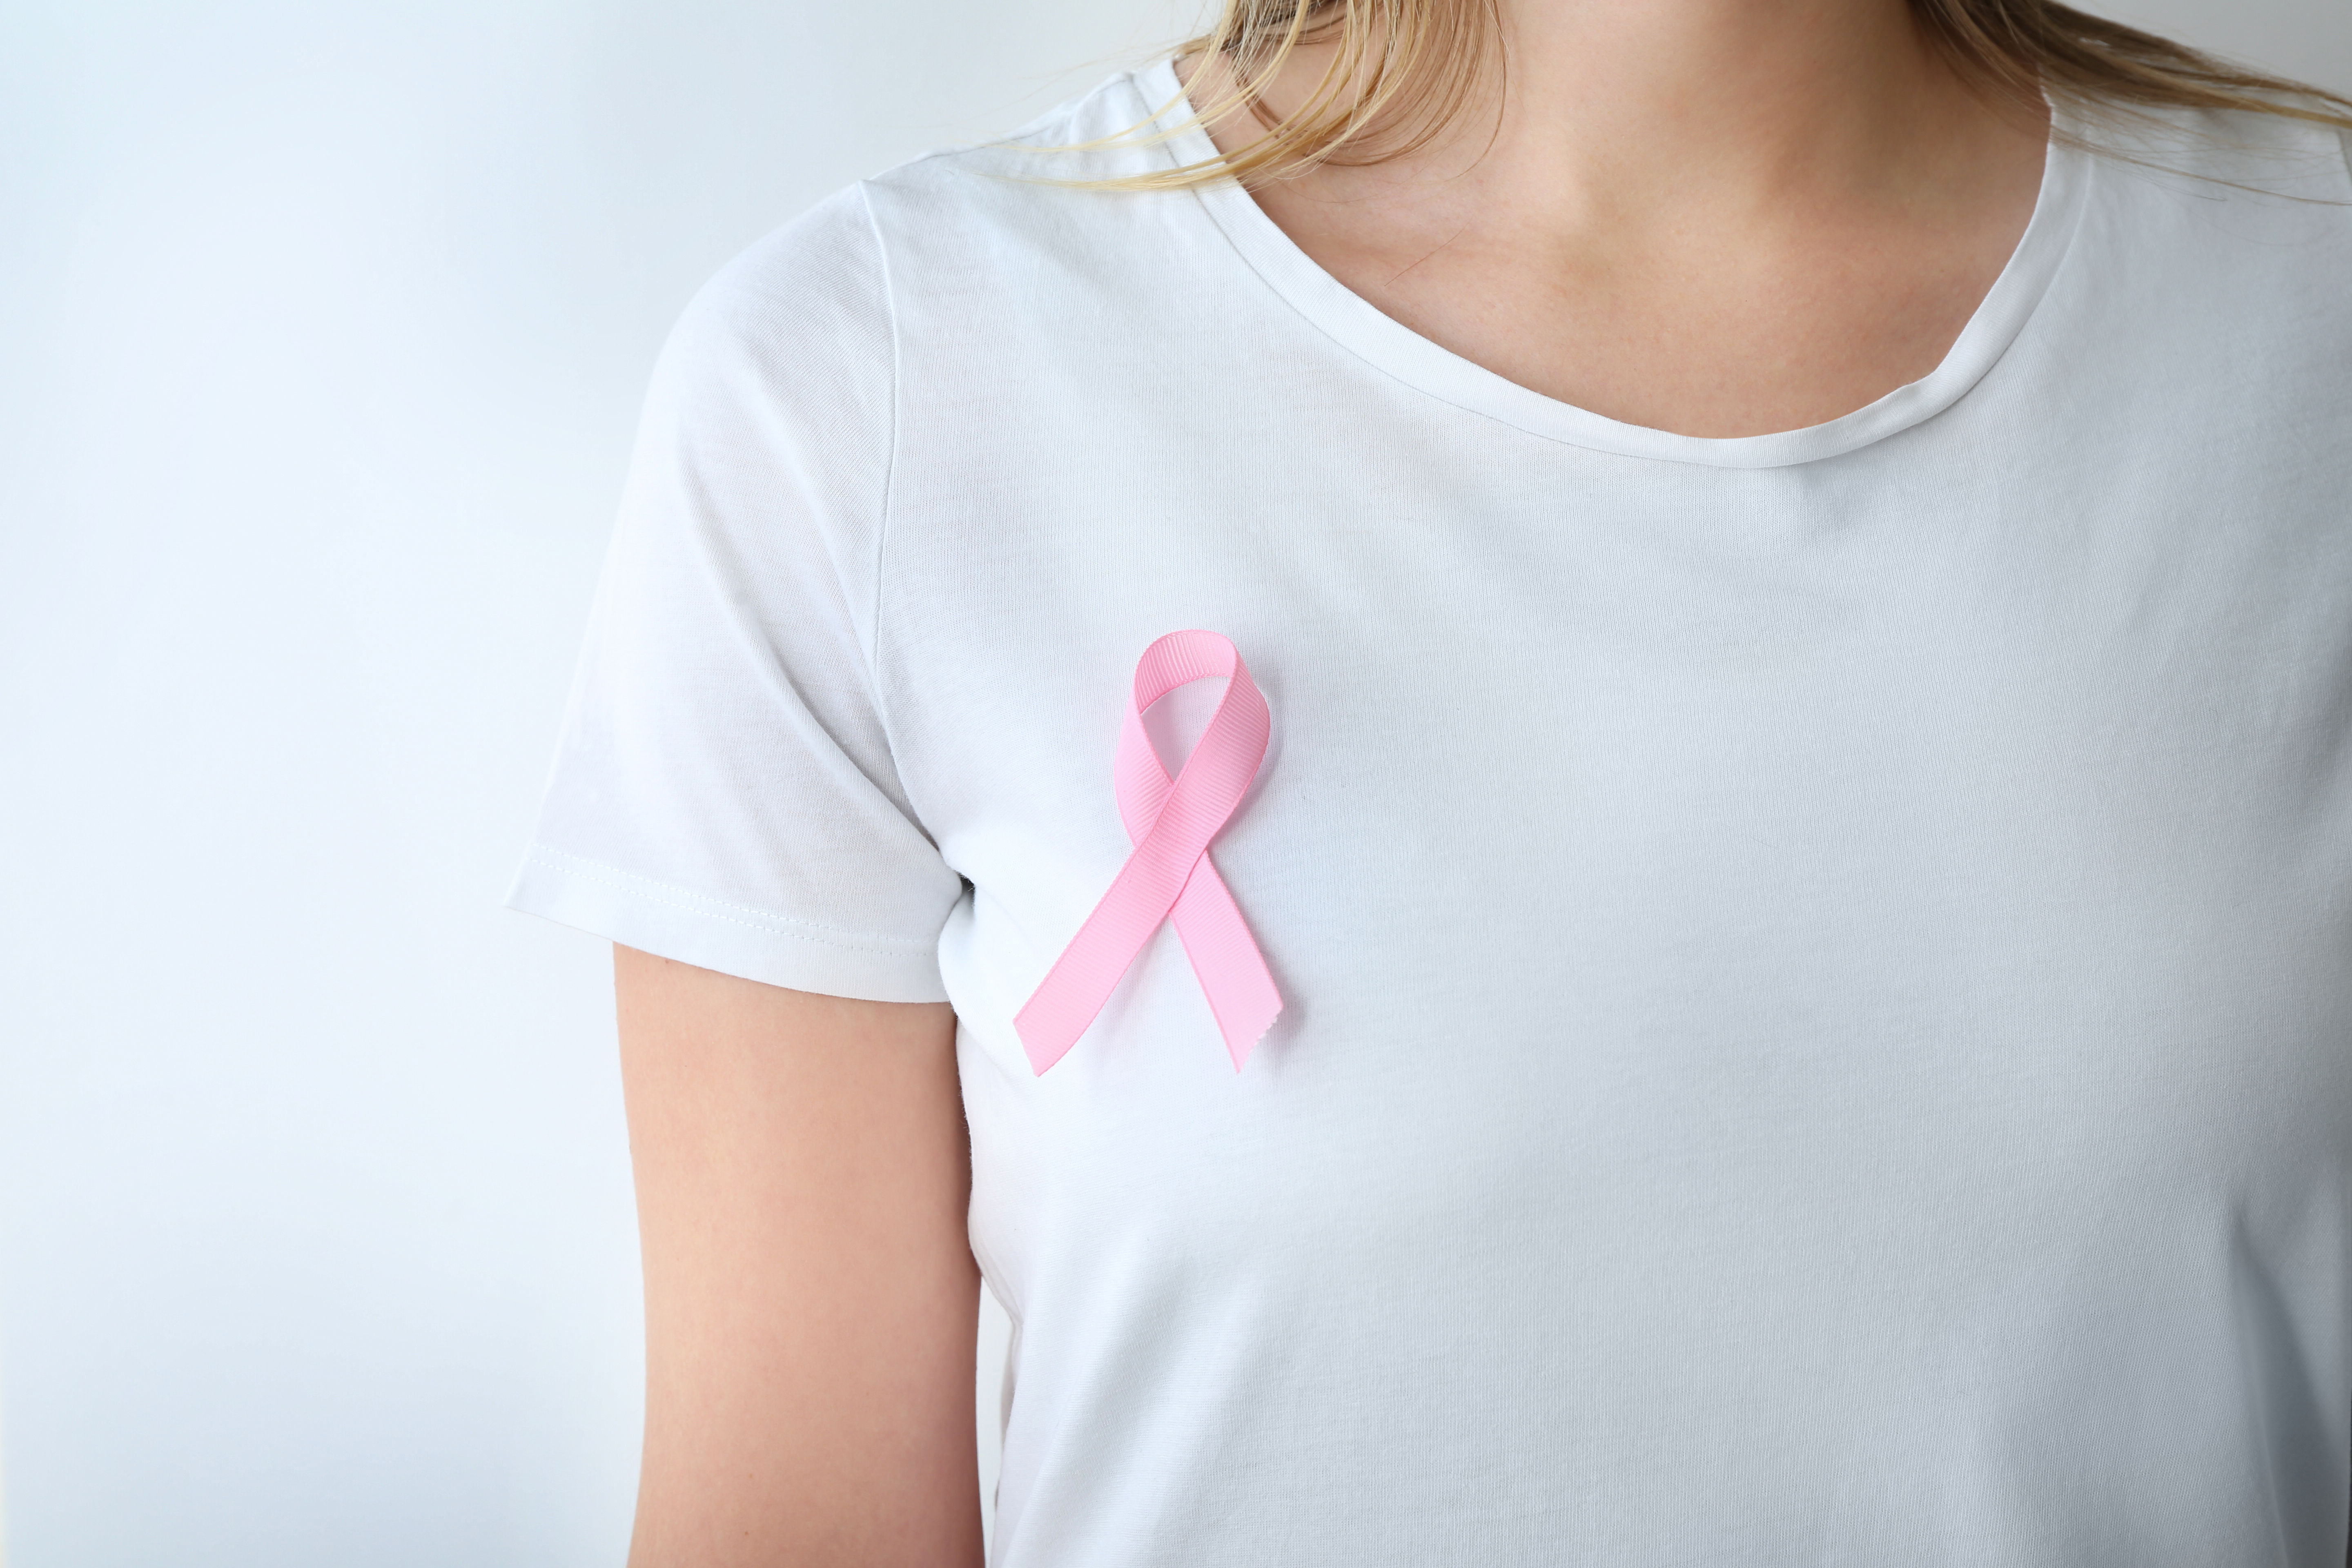 BREAST CANCER RISK FACTORS